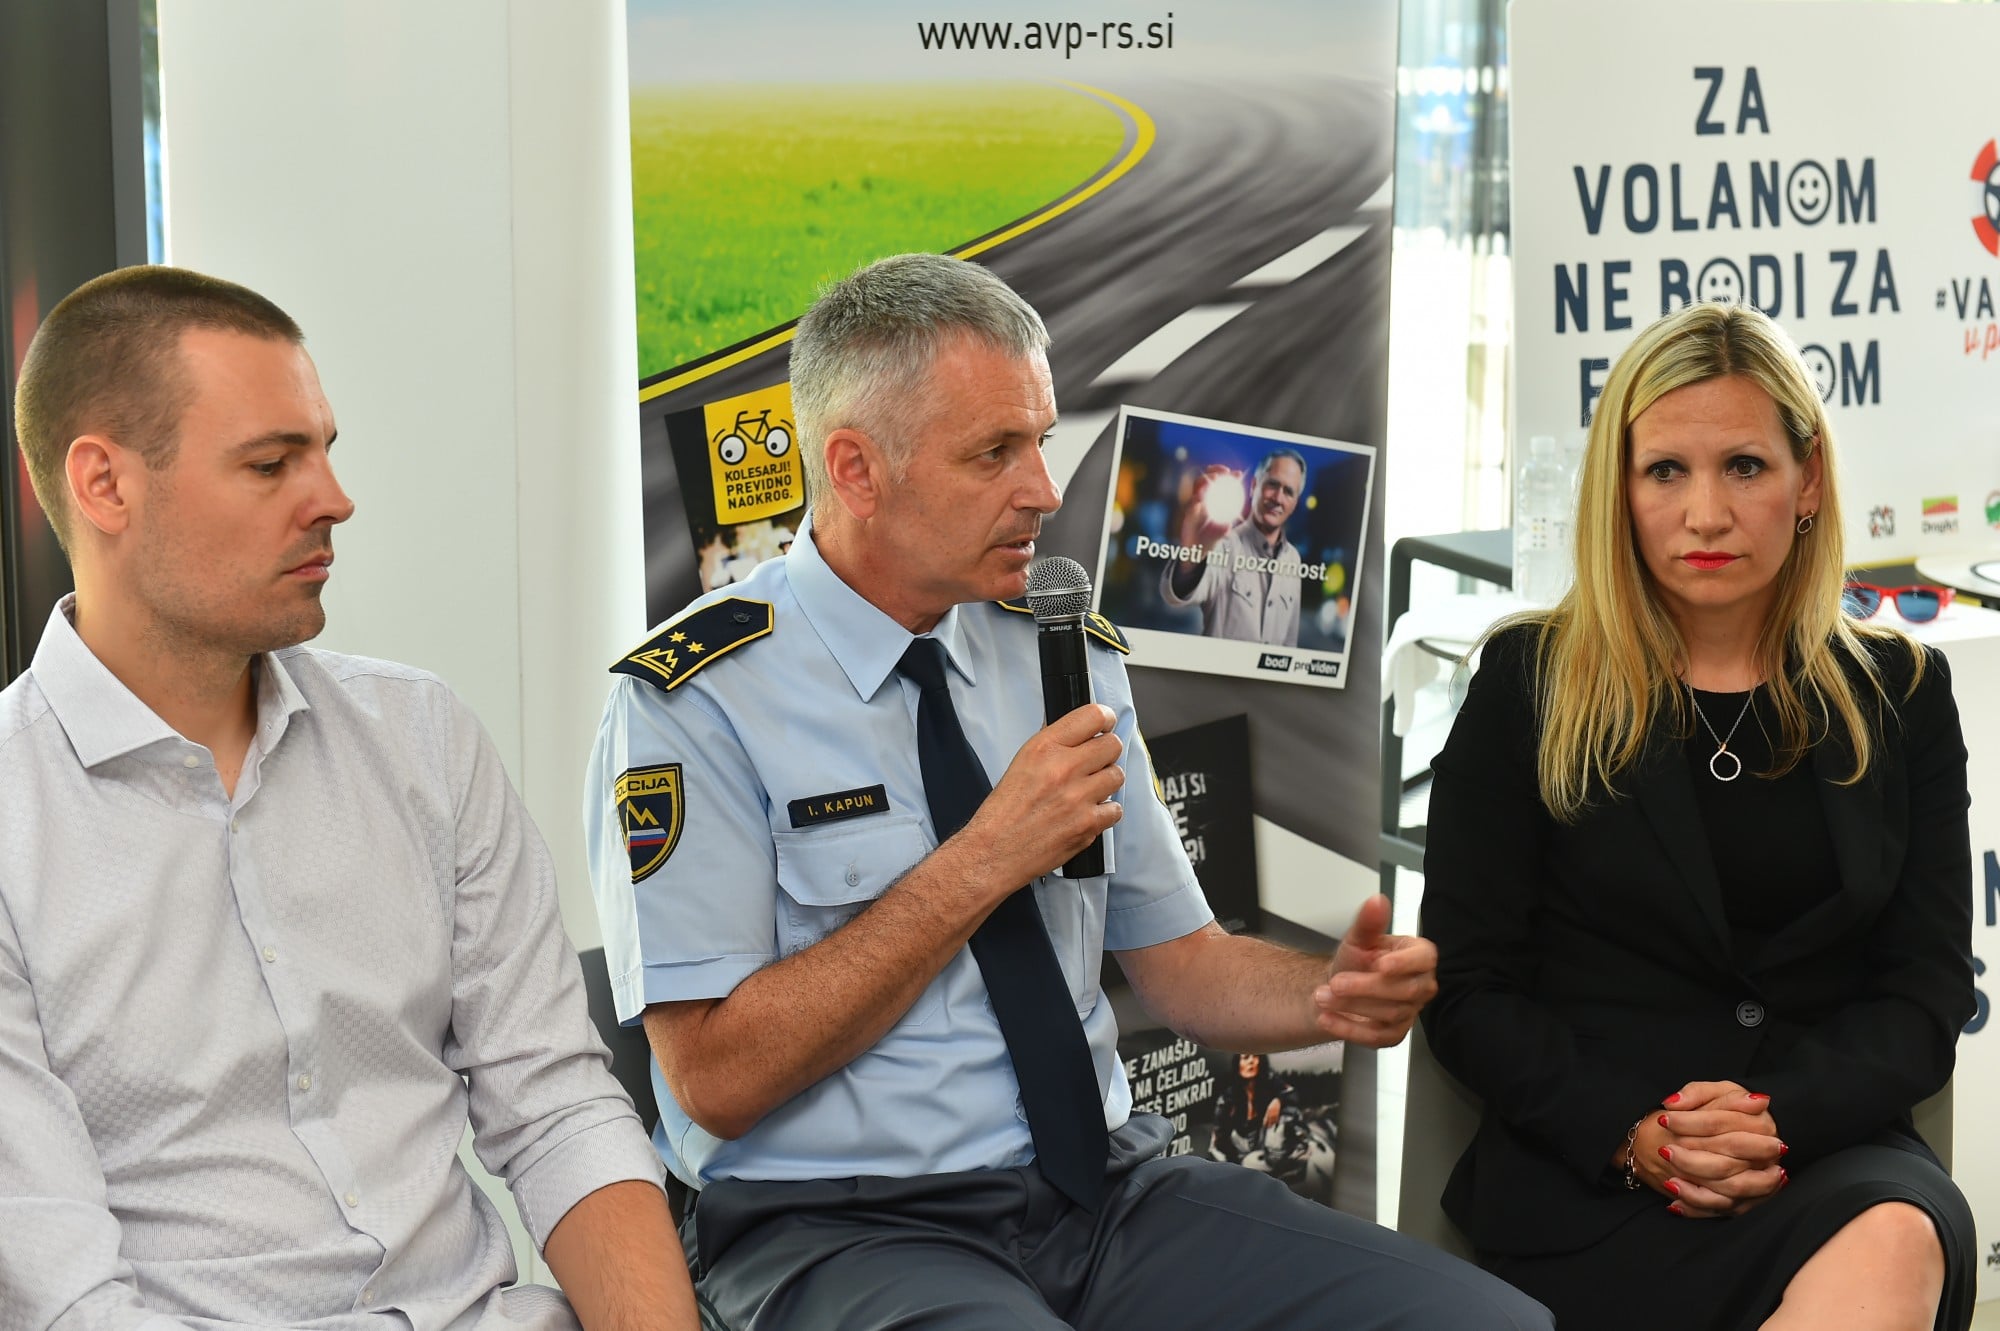 Foto 2 – (od leve proti desni): Tine Lugarič – Luna \TBWA, mag. Ivan Kapun - Policija, Vesna Marinko, mag. upr. ved, v. d. direktorice Agencije za varnost prometa.